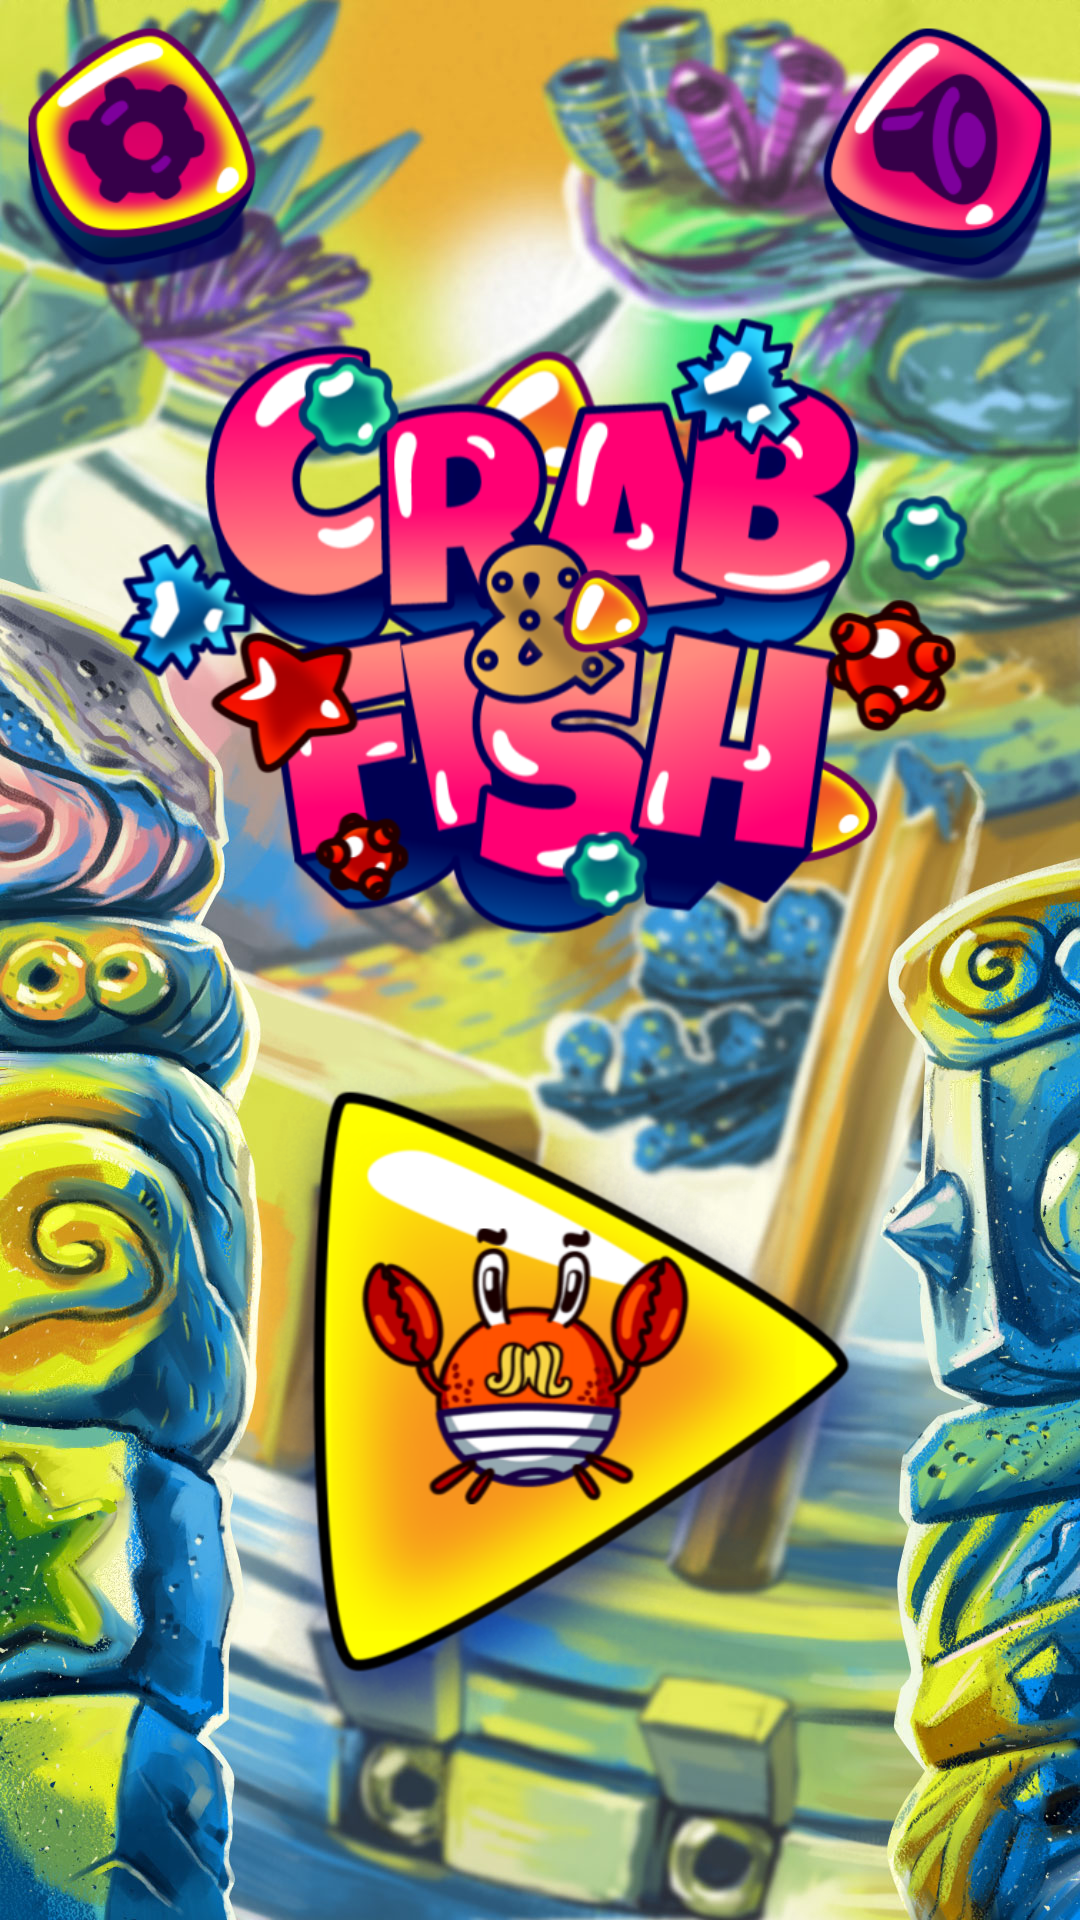 Screenshot 1 of Crab and Fish: sechs Ecken im Block des Helden 1.0